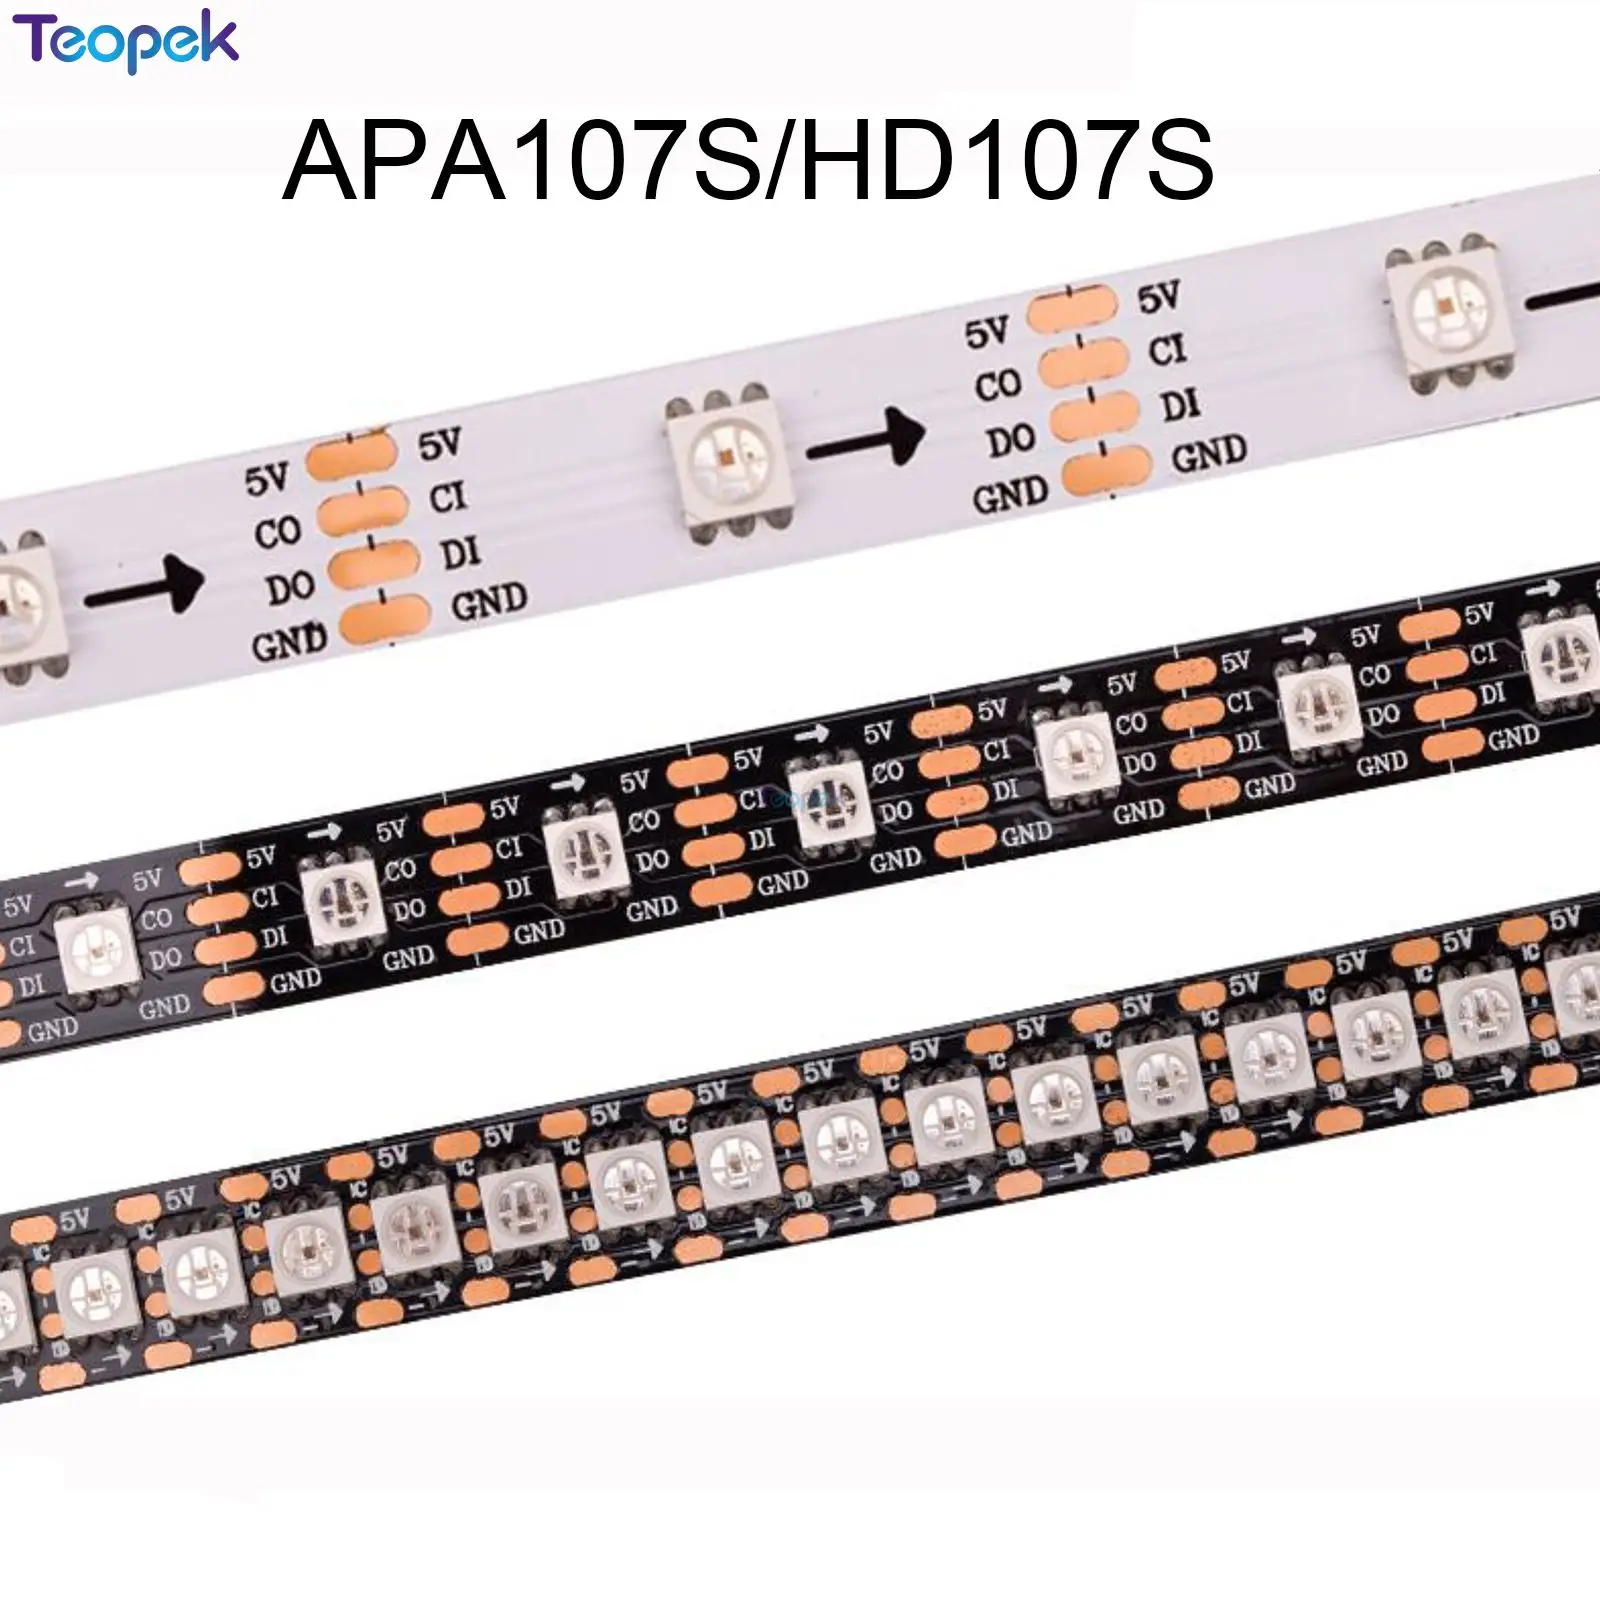 1m/5m High Density APA107 APA102 Upgrade Version RGB Strip Light HD107S Led Strip 30/60/144 pixels Black/White PCB DC5V